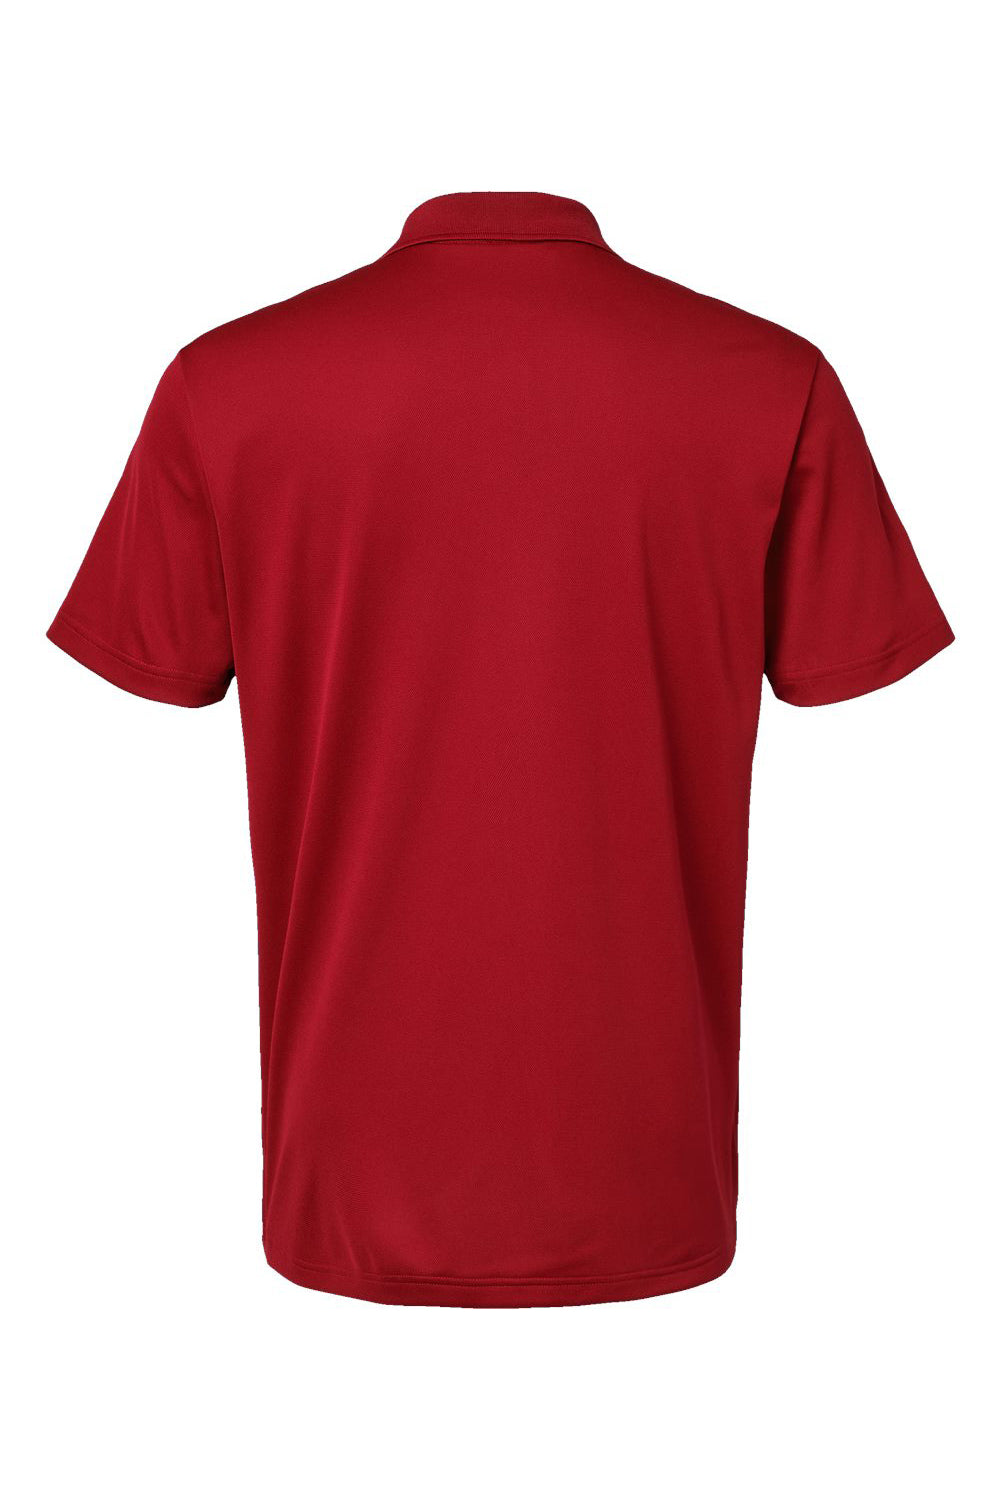 Adidas A430 Mens UV Protection Short Sleeve Polo Shirt Power Red Flat Back